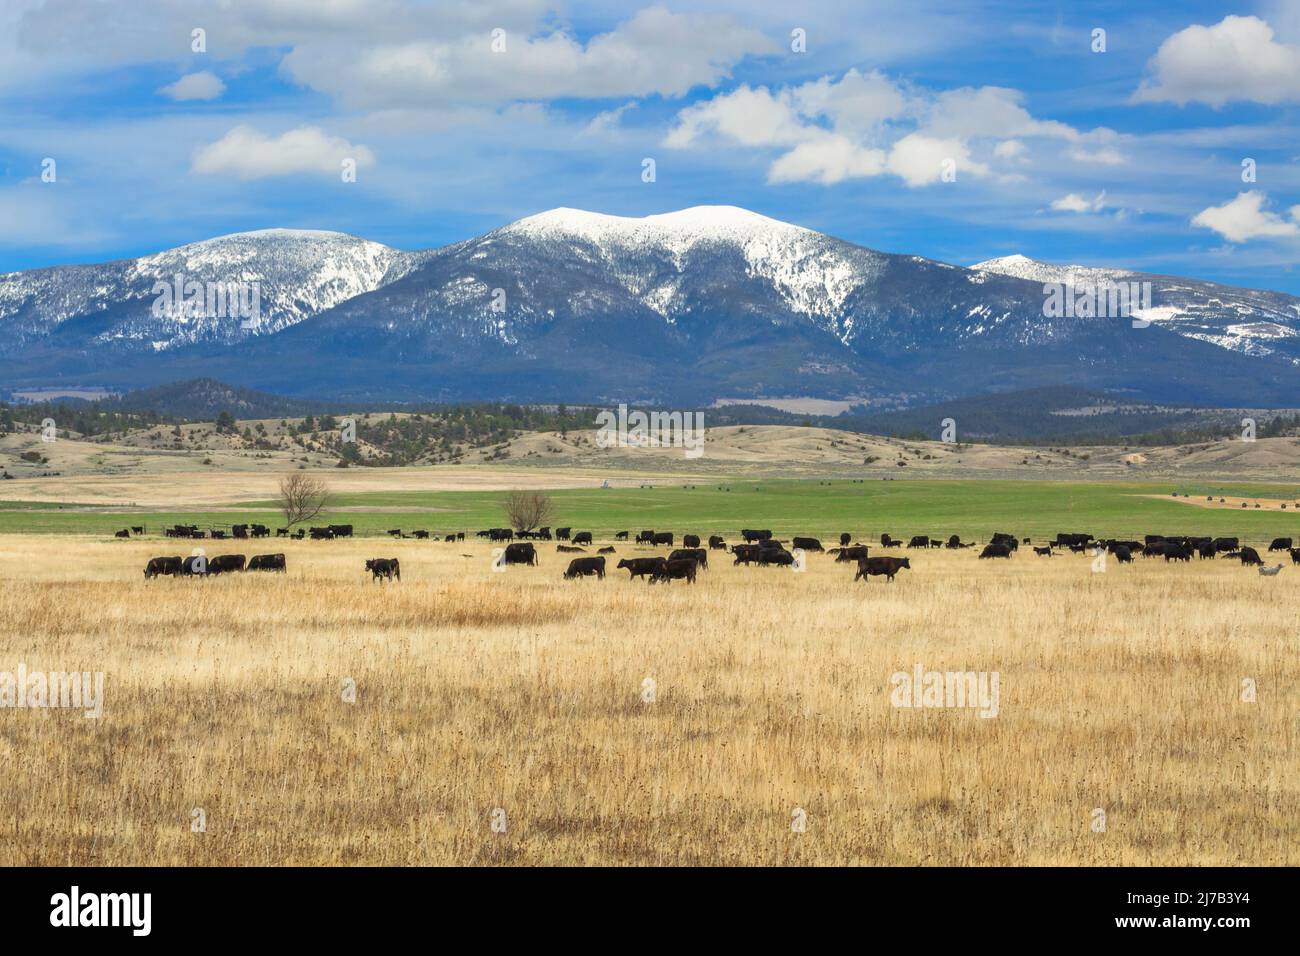 cattle grazing below mount baldy in the big belt mountains near townsend, montana Stock Photo